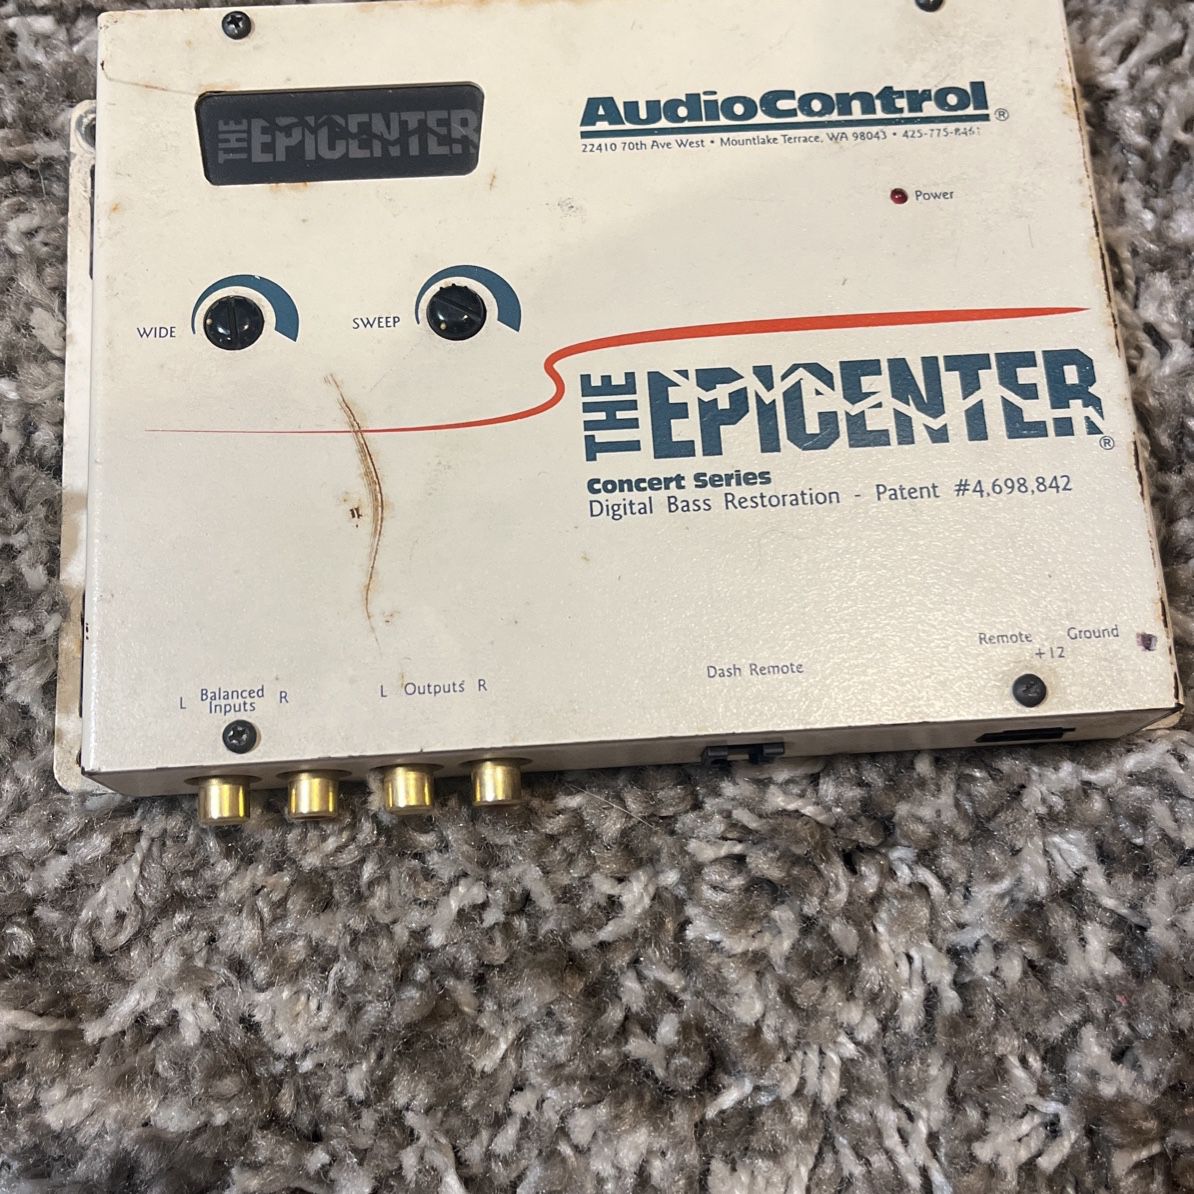 The Epicenter Audio Control Amp